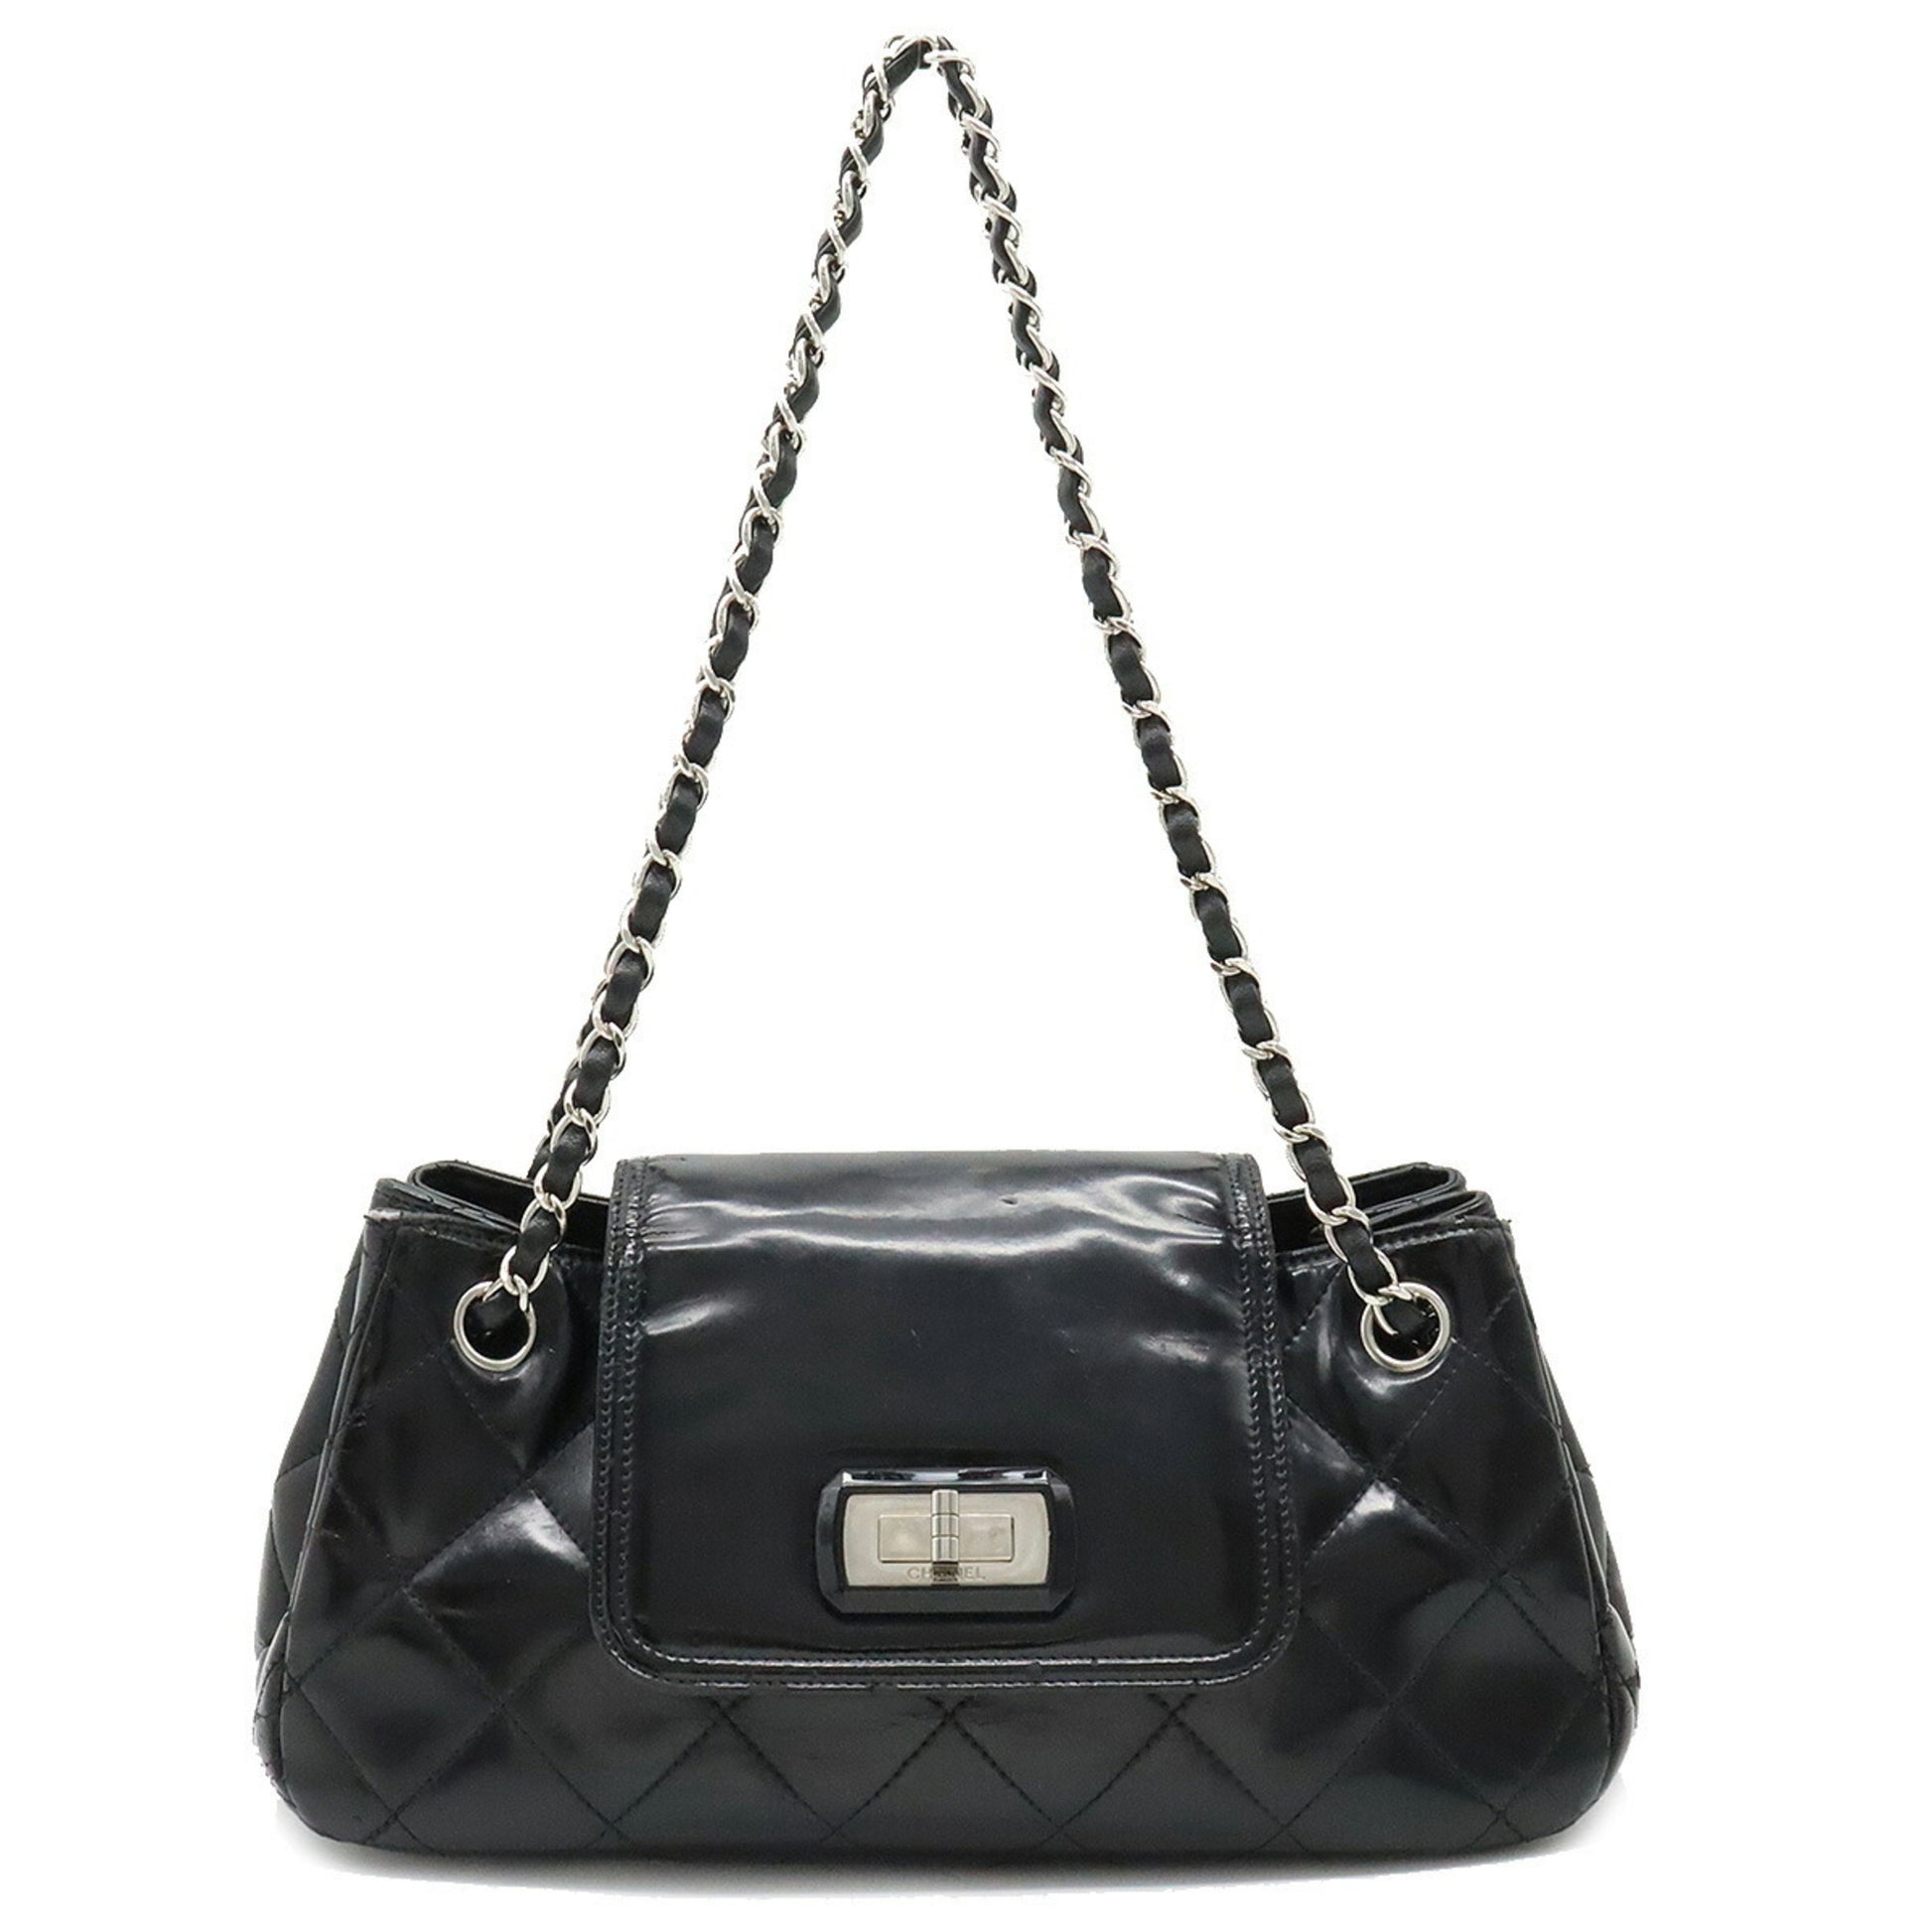 CHANEL 2.55 Matelasse W Chain Bag Shoulder Patent Leather Black